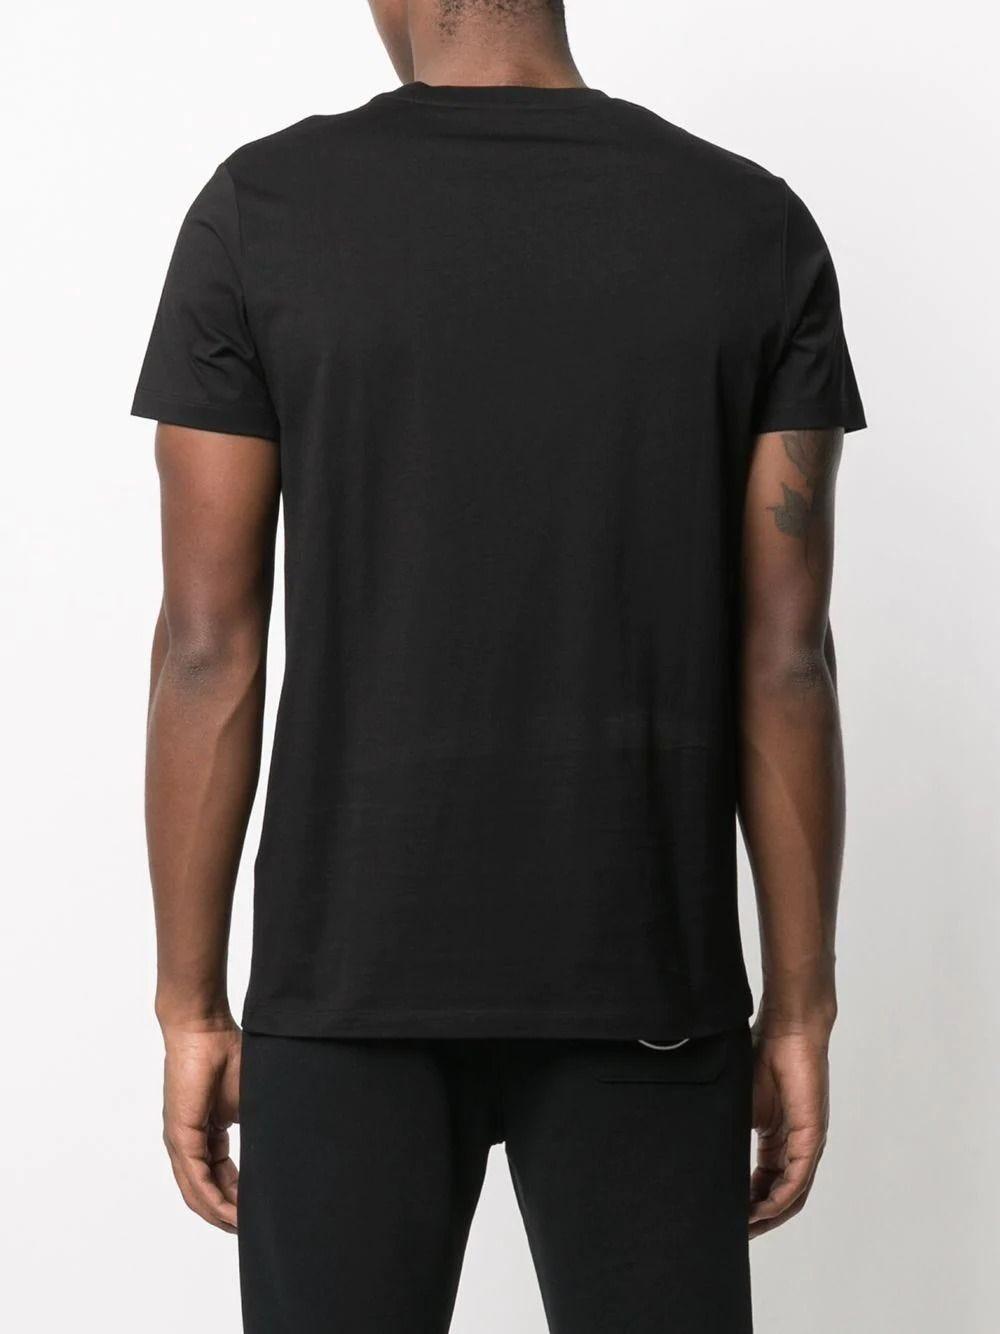 Balmain Cotton Metallic Logo Print T-shirt in Nero (Black) for Men 